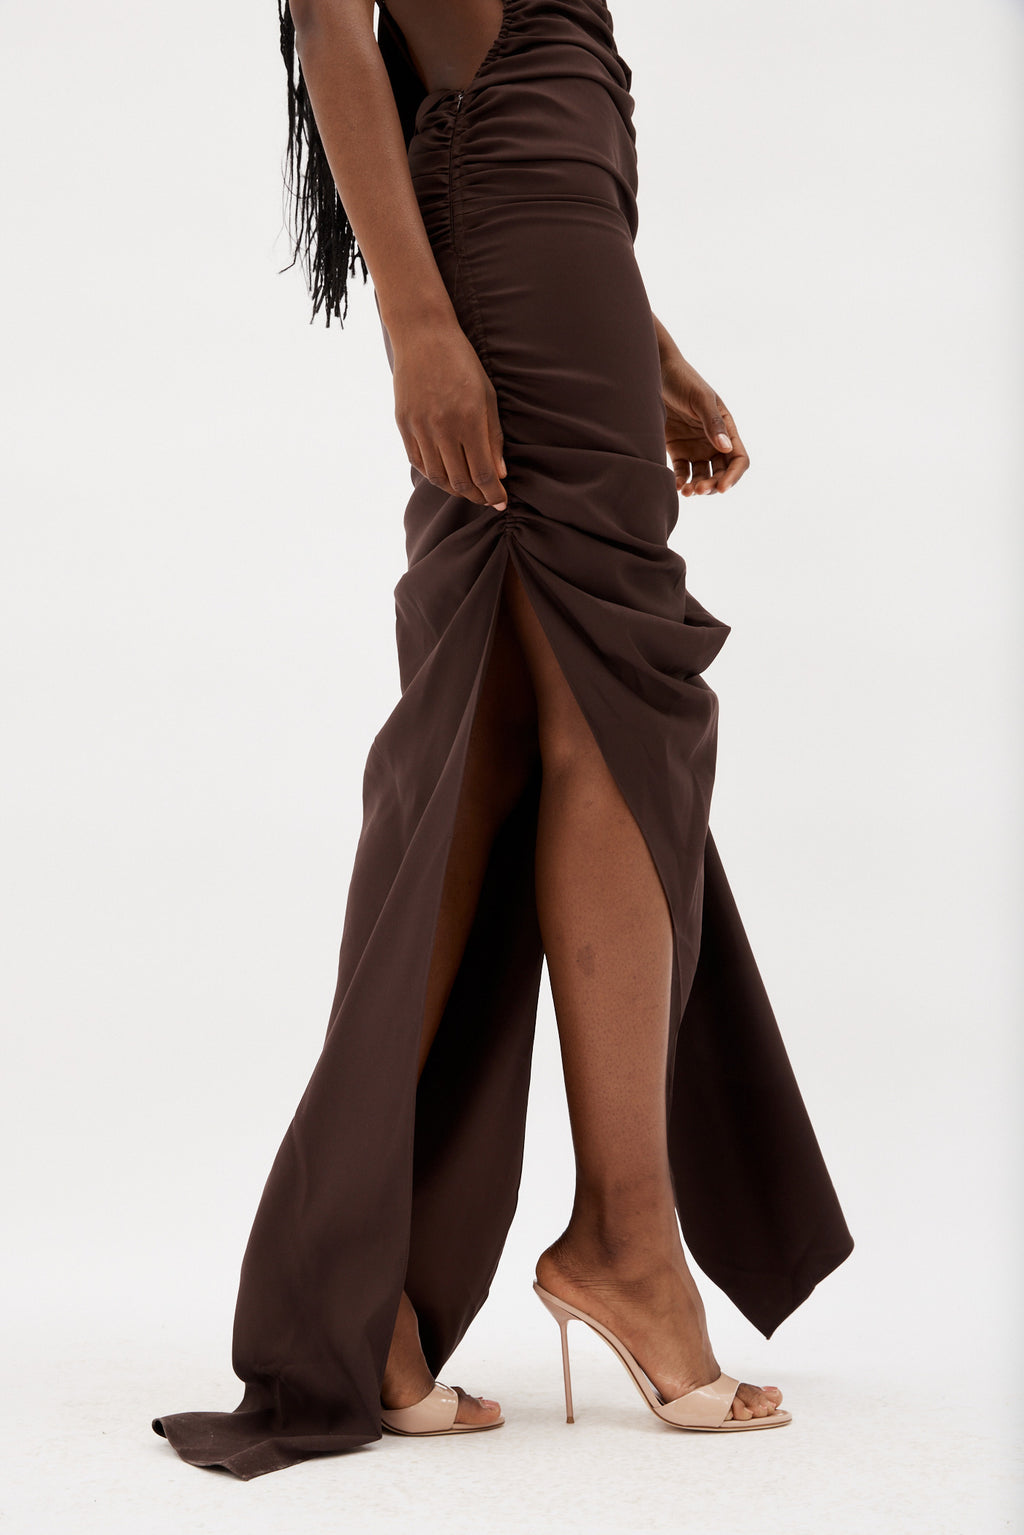 Meera Chocolate Dress